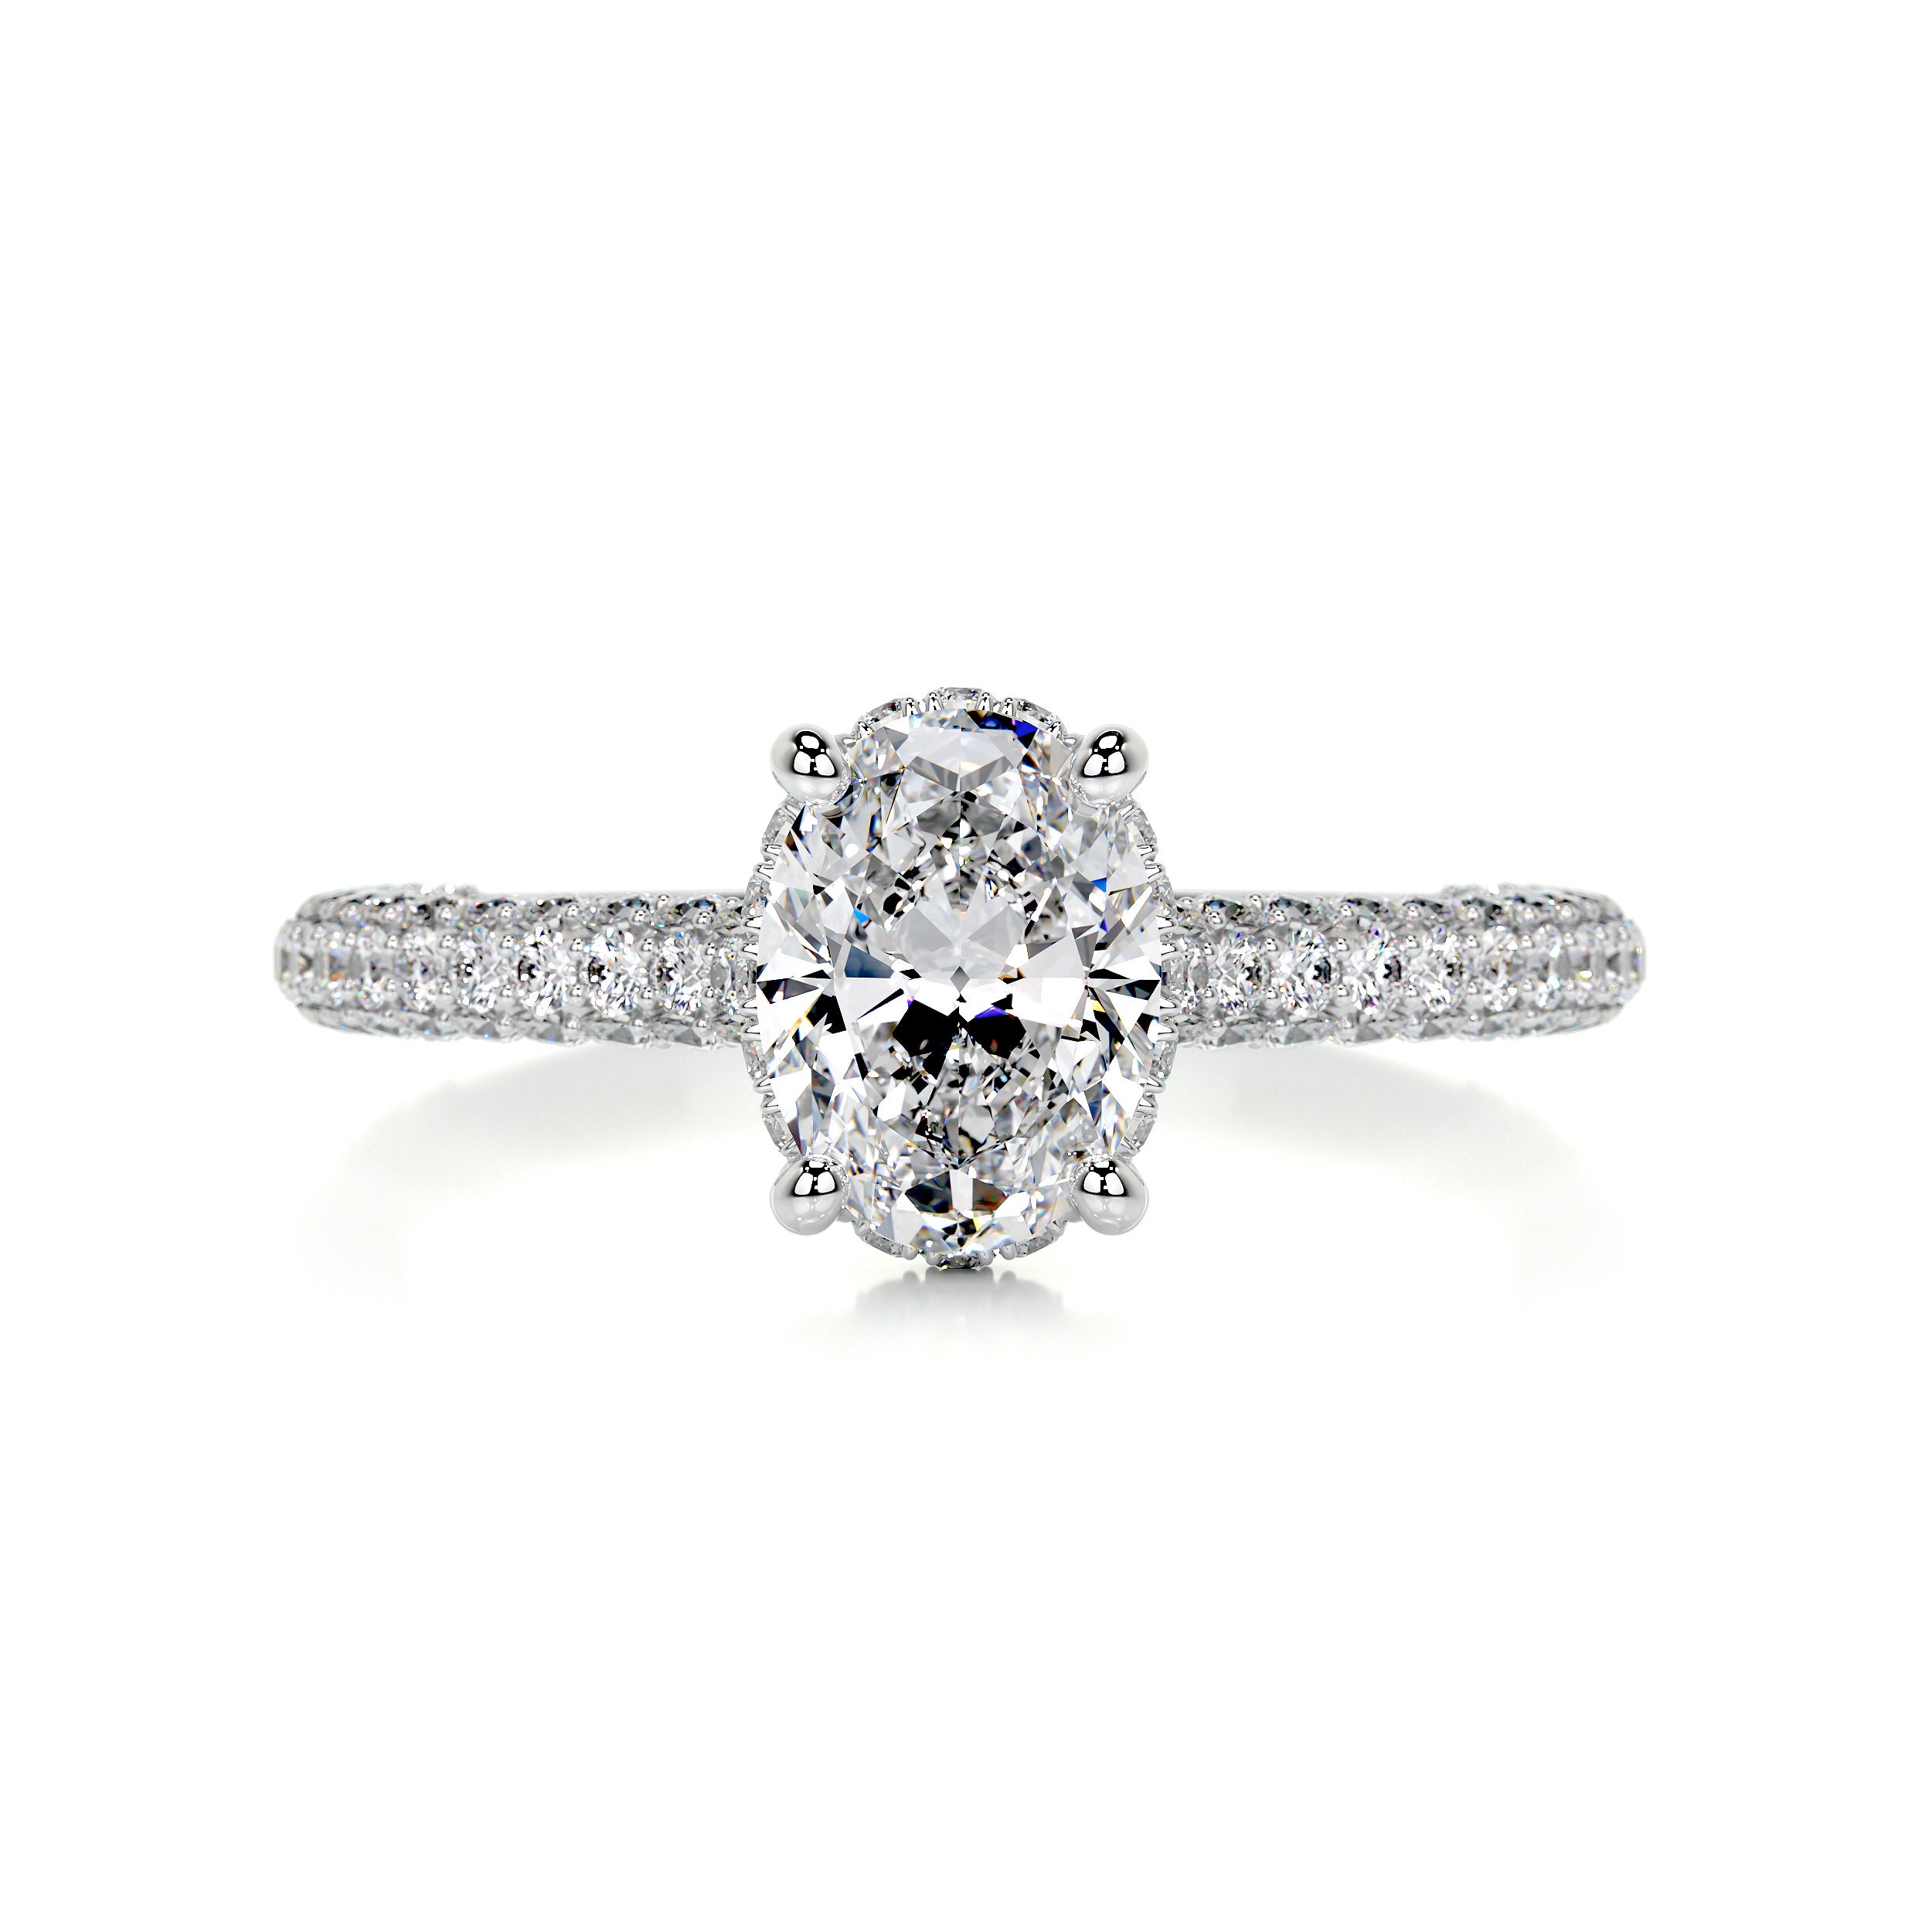 Rebecca Diamond Engagement Ring   (1.8 Carat) -18K White Gold